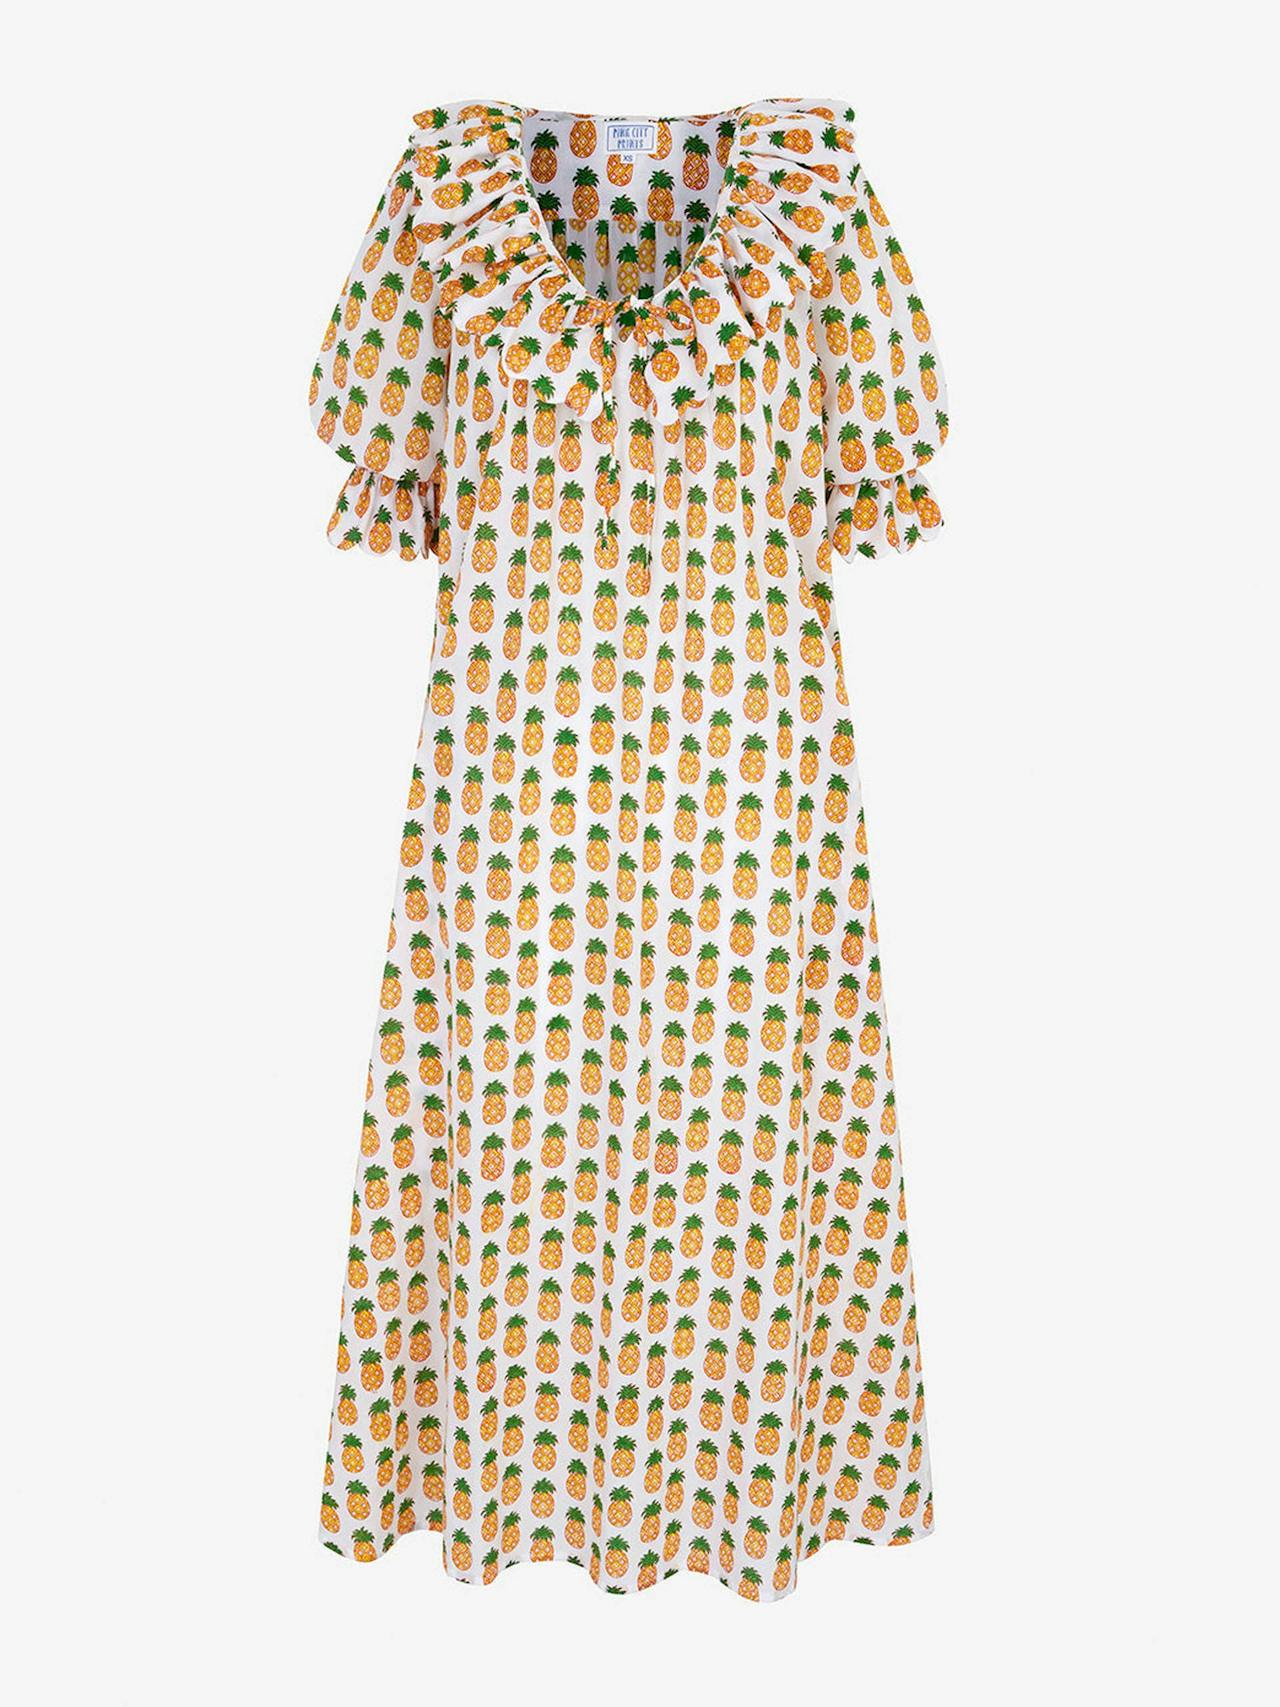 Sunshine pineapple ava dress